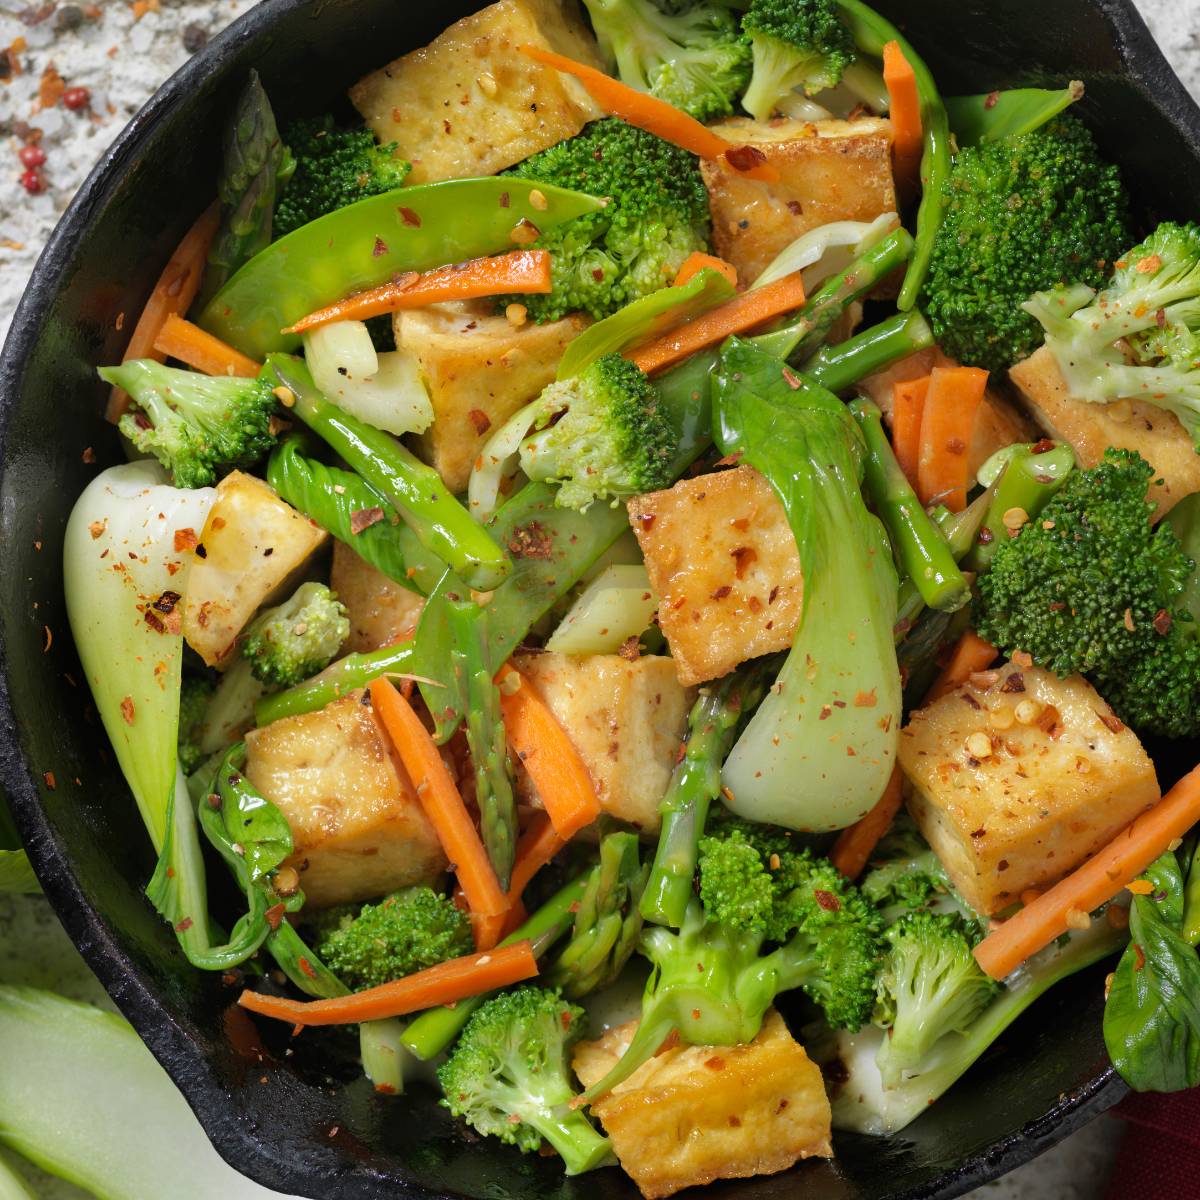 Stir-fry tofu with vegetables